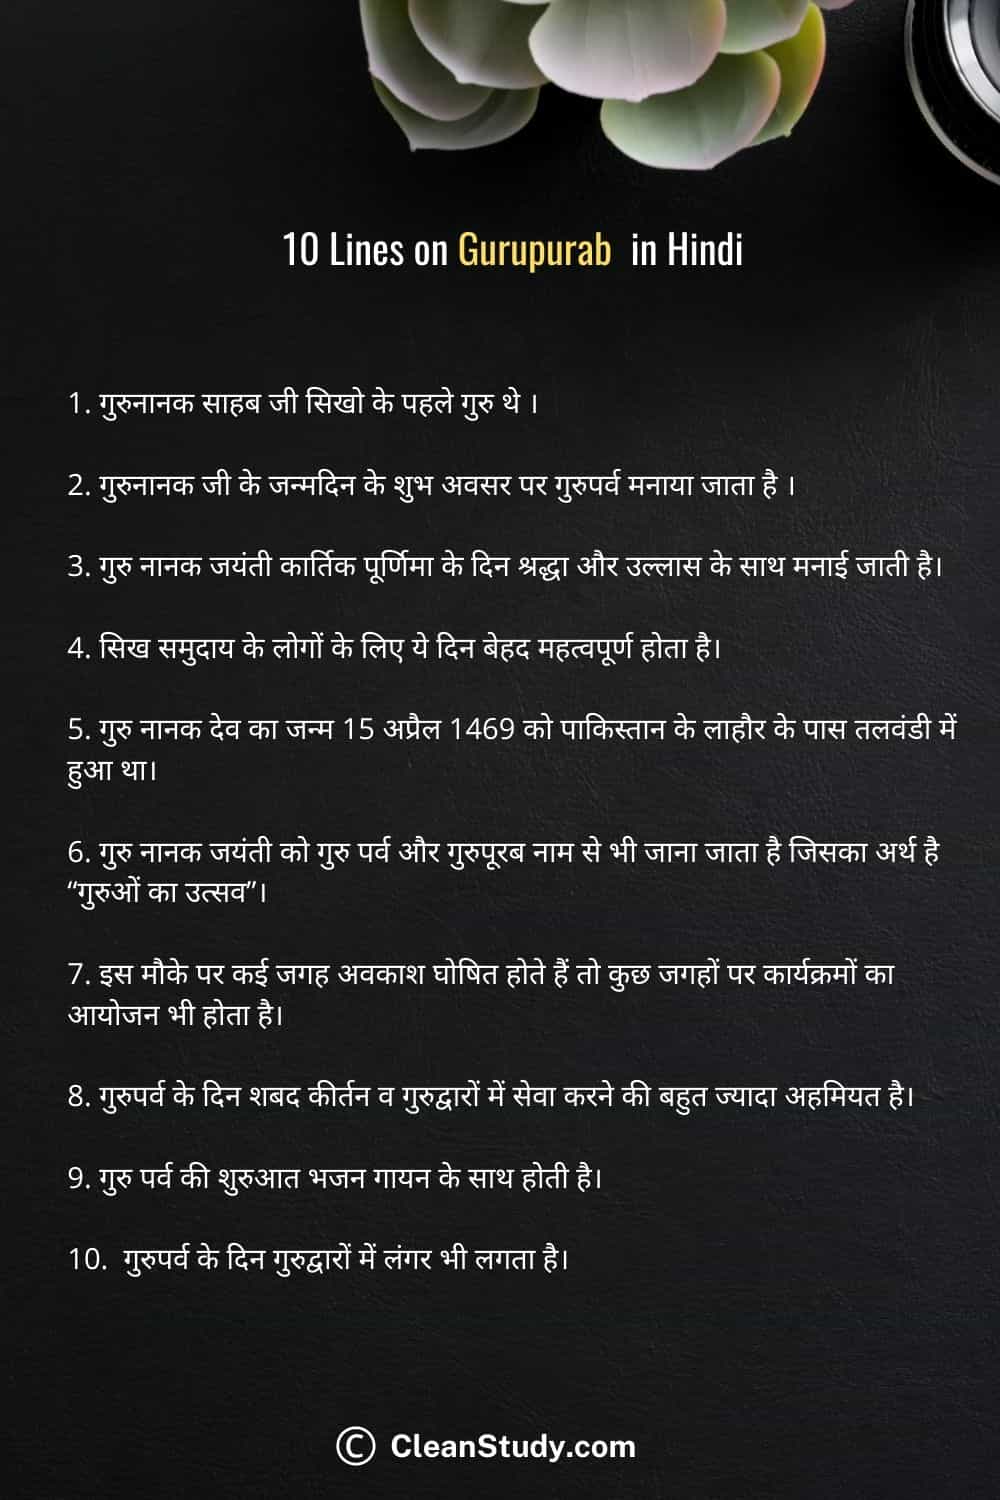 10 Lines on Gurupurab in Hindi